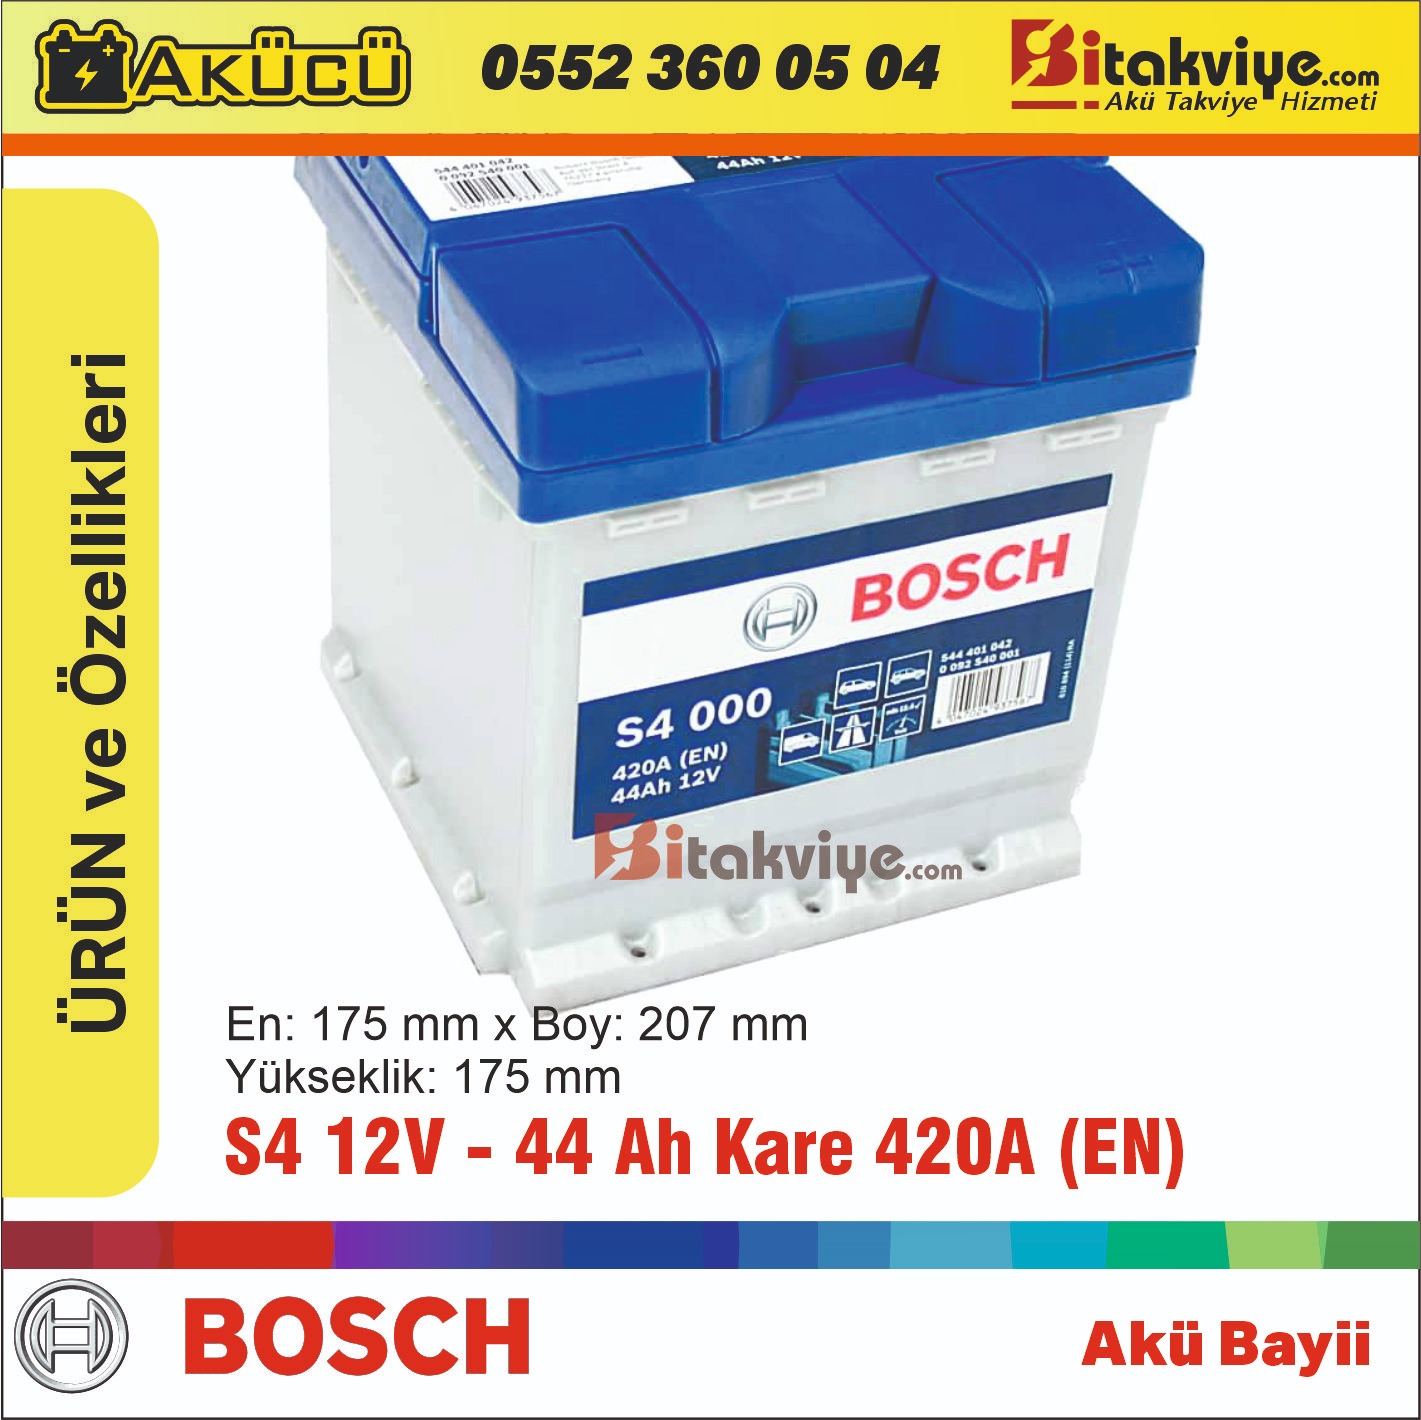 Bosch S4 041 12 V 44 Ah - 420 A (EN) Akü